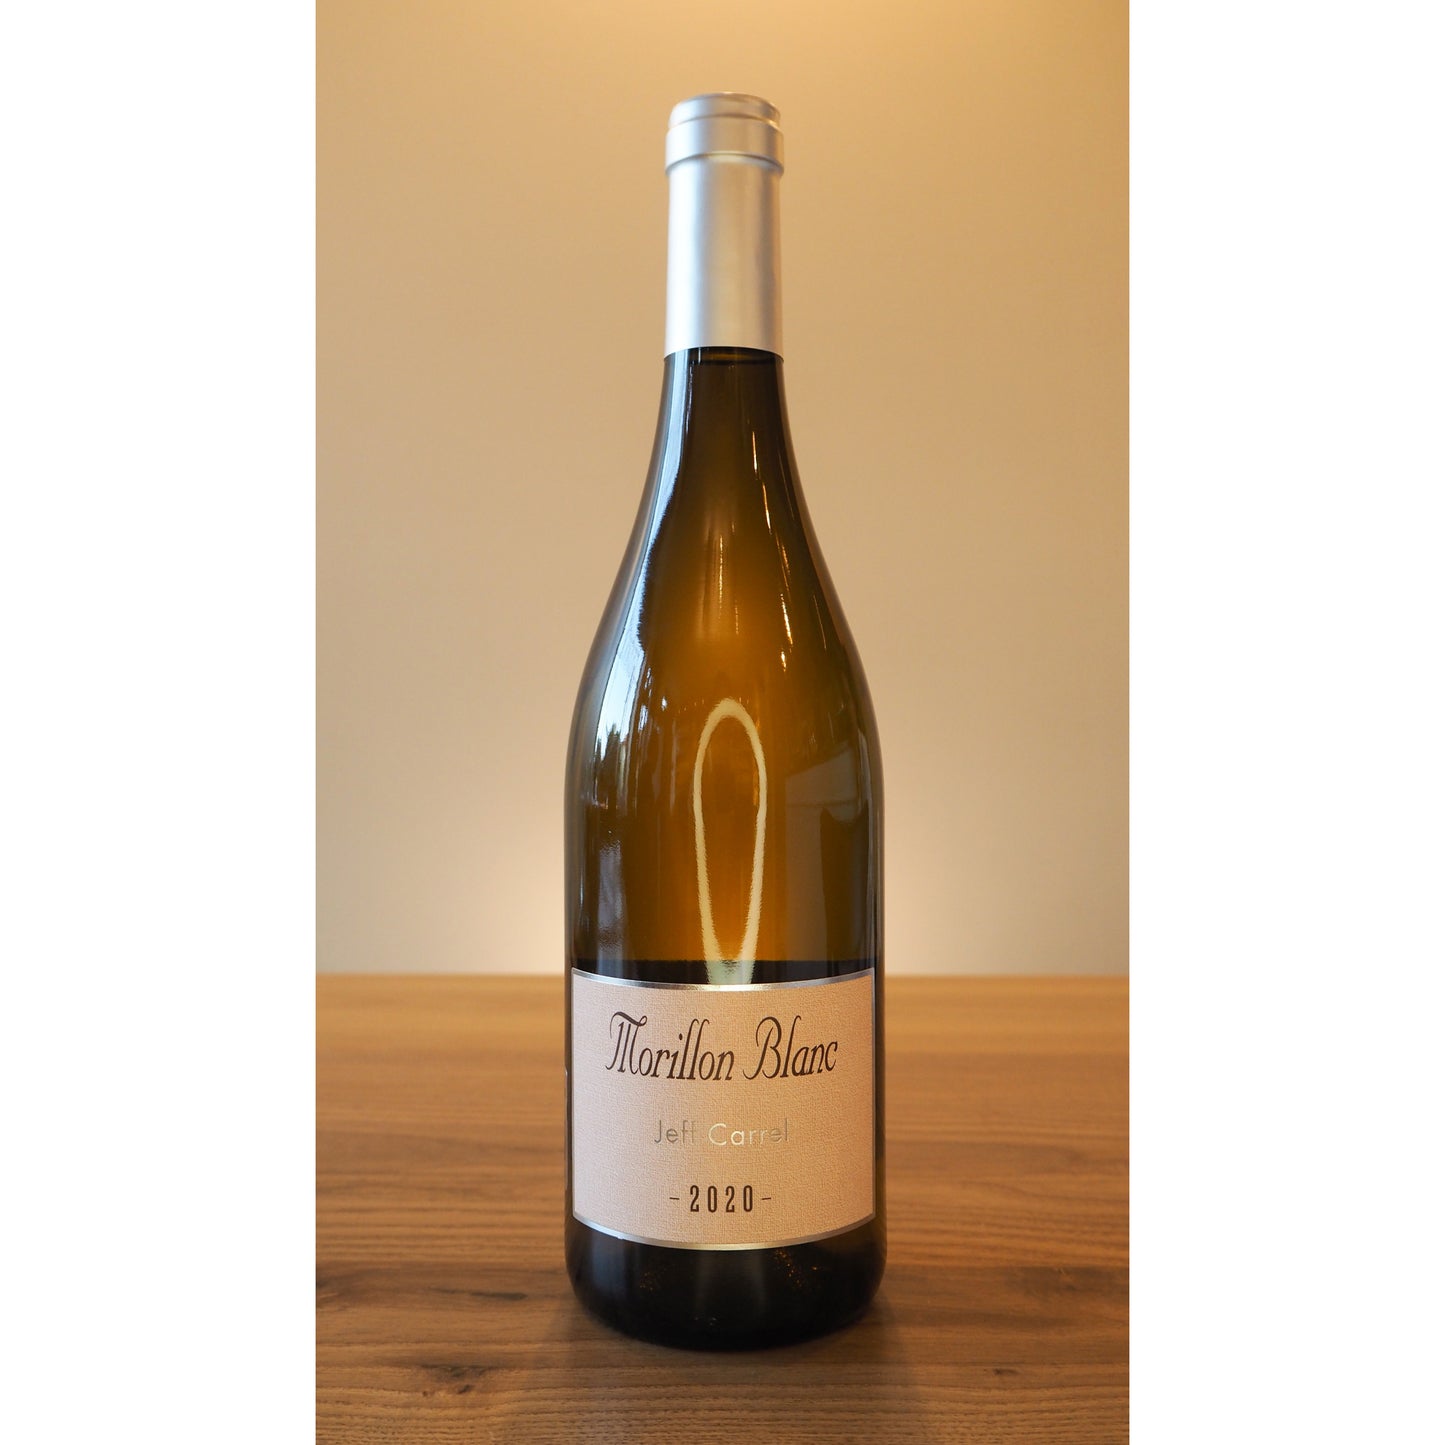 Morillon Blanc Chardonnay 0,75L - La petite France Vilnius - White wine - Jeff Carrel